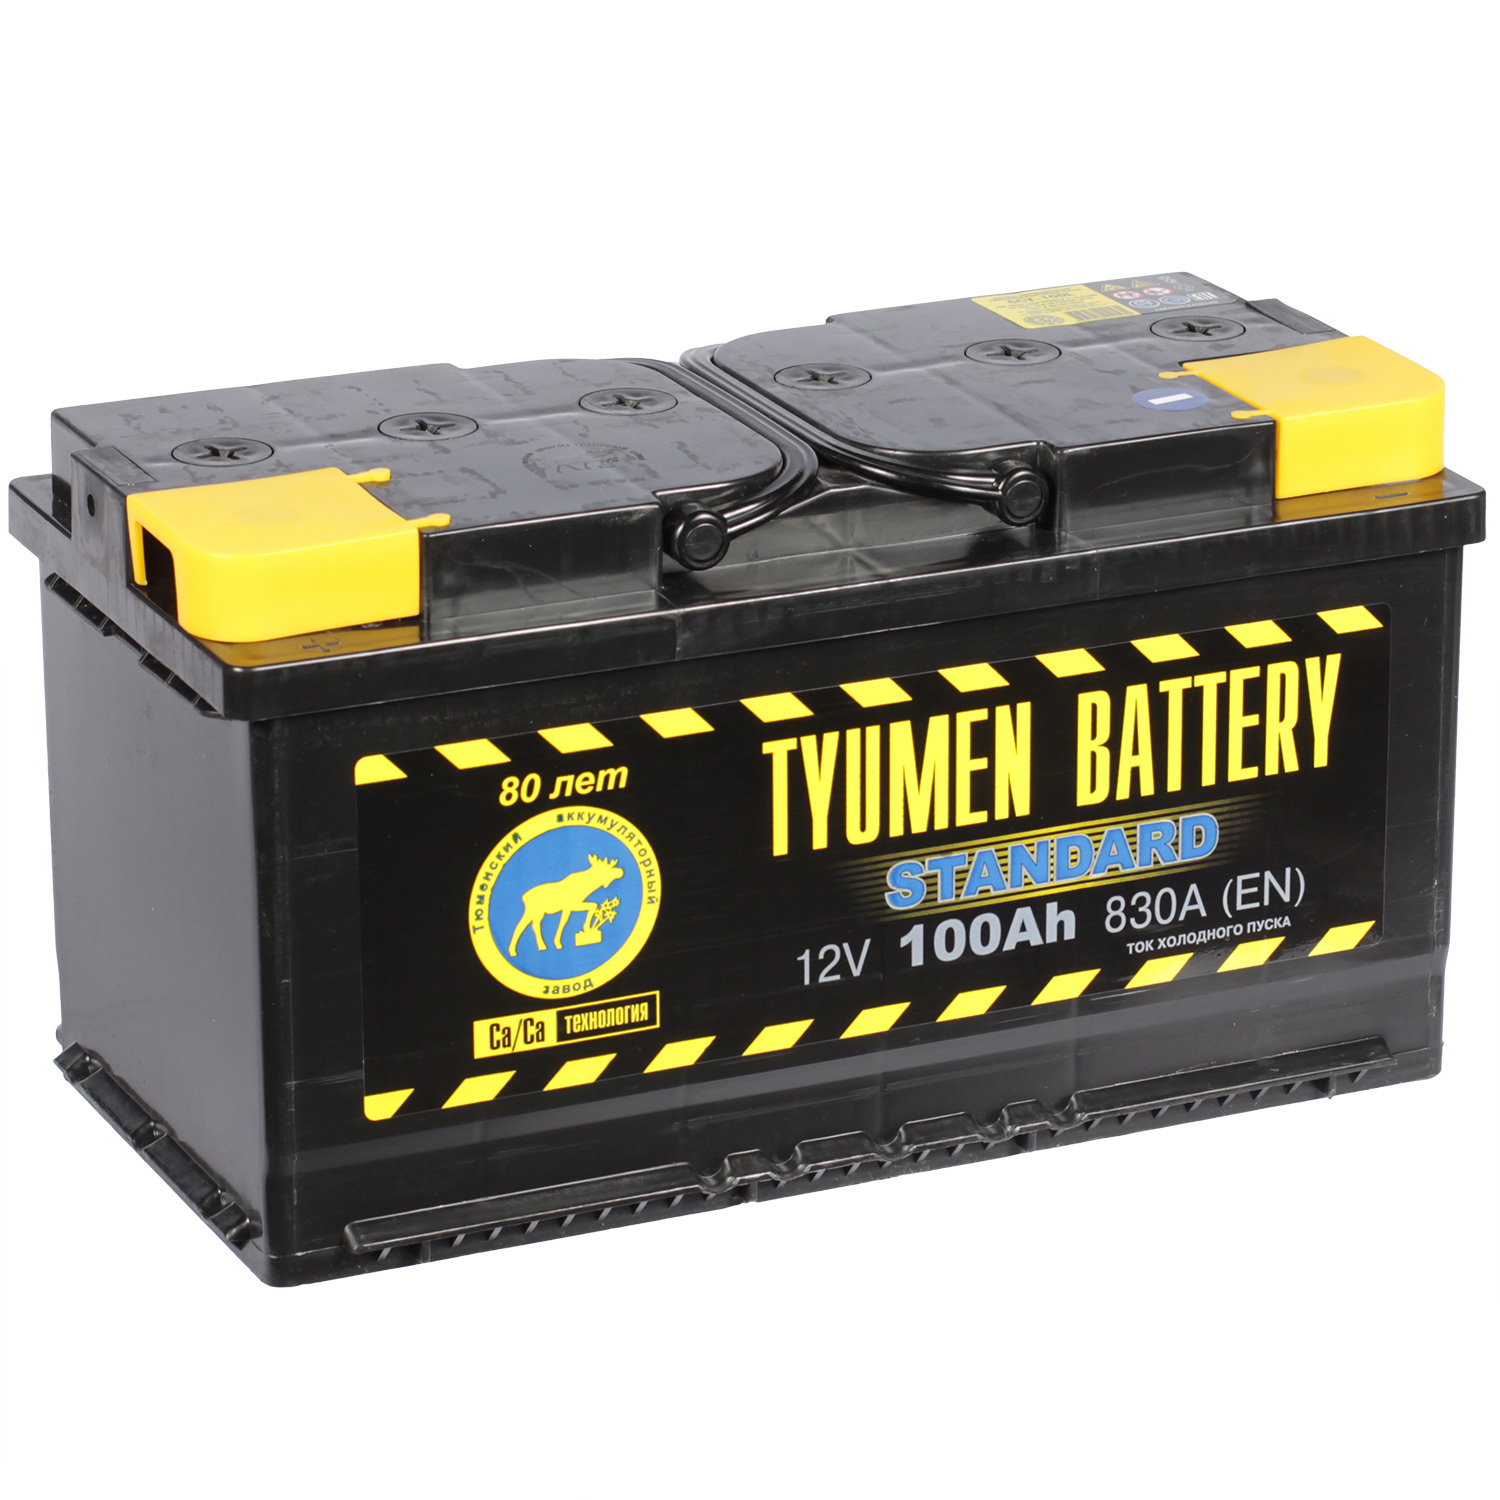 Tyumen Battery Автомобильный аккумулятор Tyumen Battery Standard 100 Ач прямая полярность L5 tyumen battery автомобильный аккумулятор tyumen battery standard 55 ач прямая полярность l2